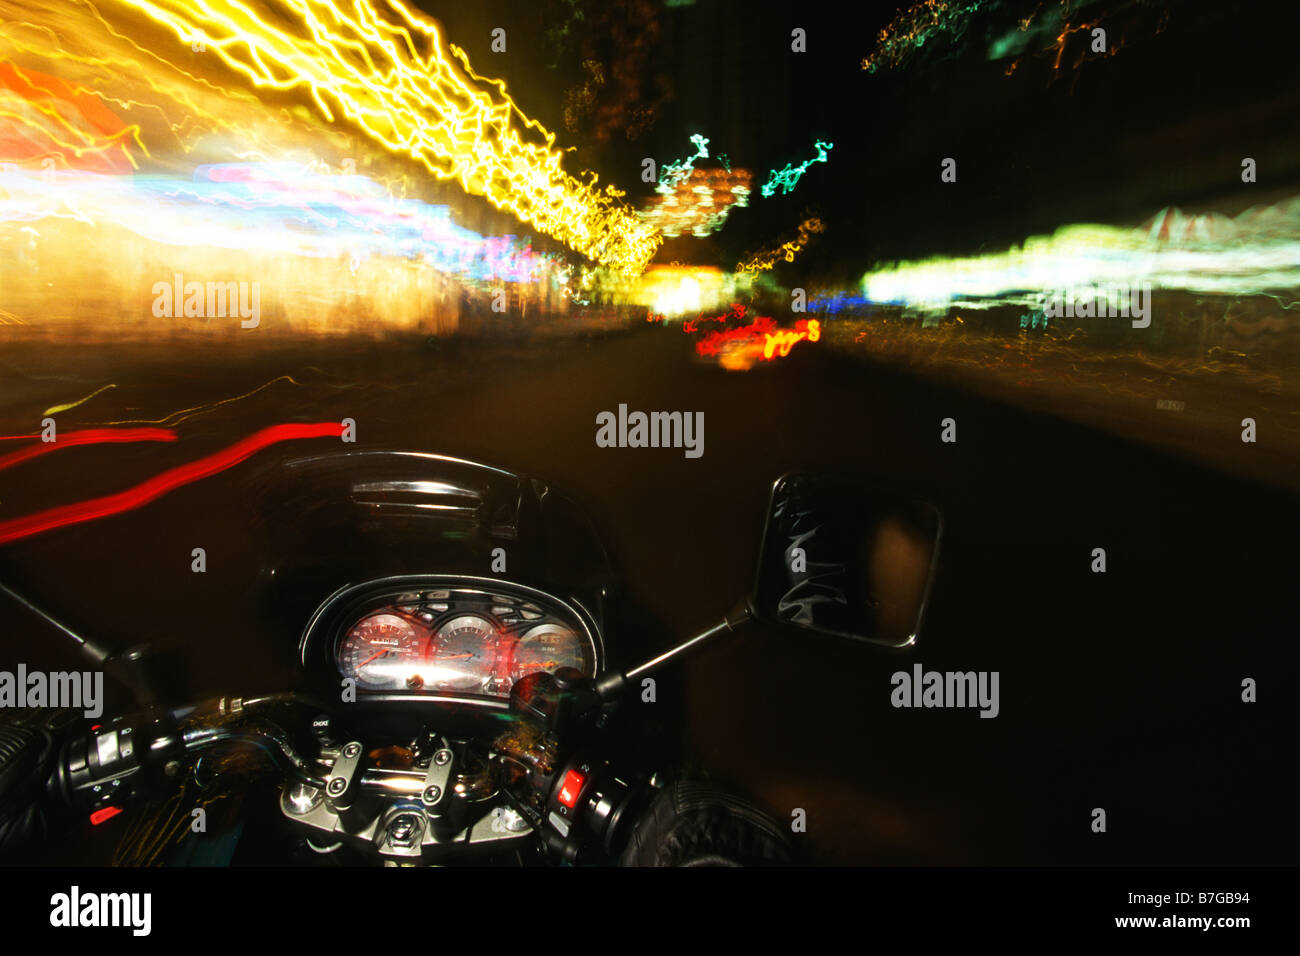 Queensland Australia A motorbike on a city street at night Photo Simon Grosset Stock Photo